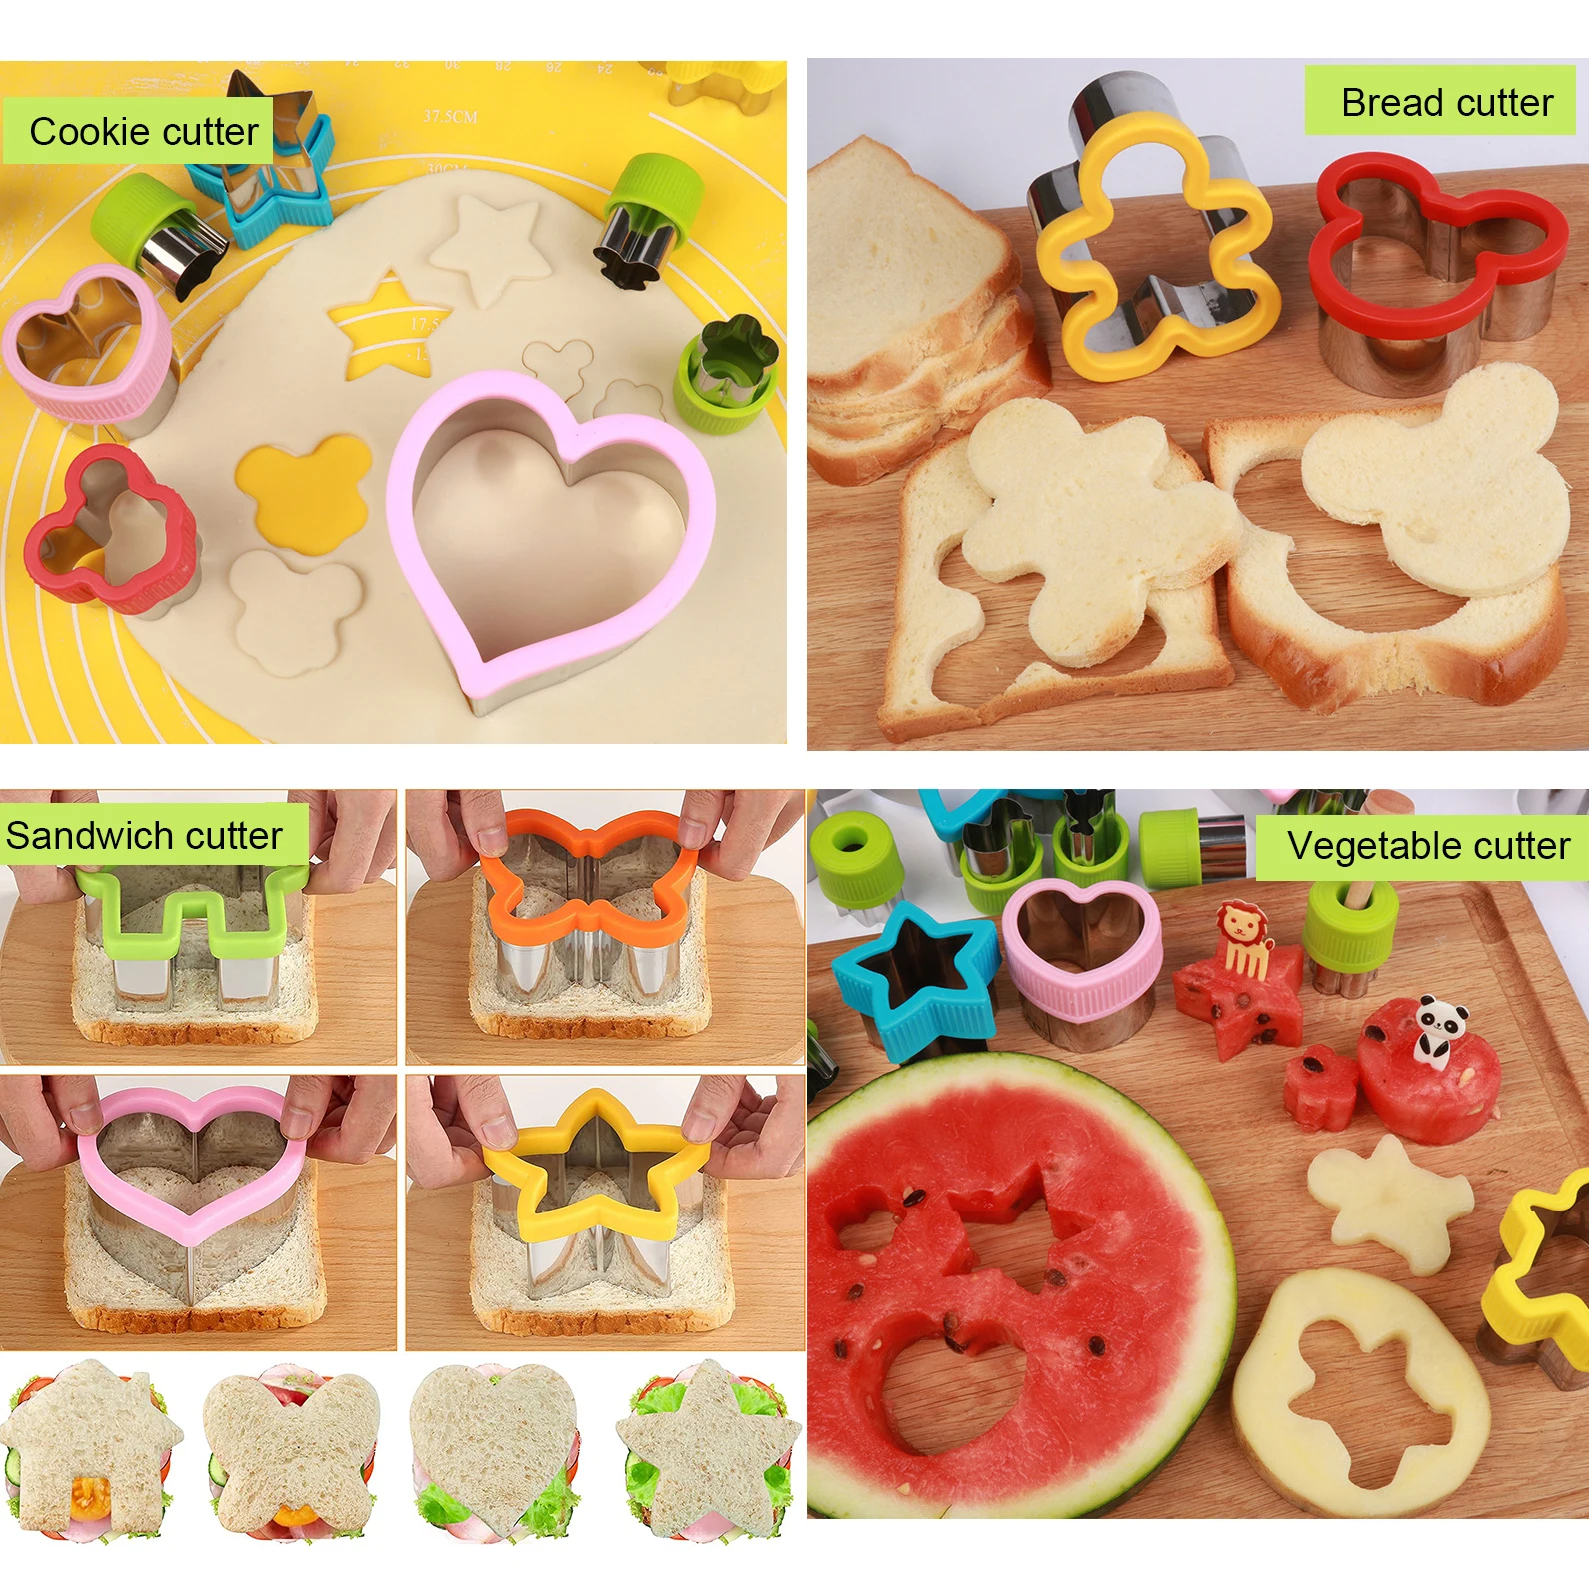 https://ae01.alicdn.com/kf/S734eba7020f849b69c8d2e7c86ab7e5fu/Fruit-Cutters-for-Children-Kids-Food-Cookie-Sandwich-Mold-Maker-with-Shapes-Vegetable-Bread-Mould-Set.jpg